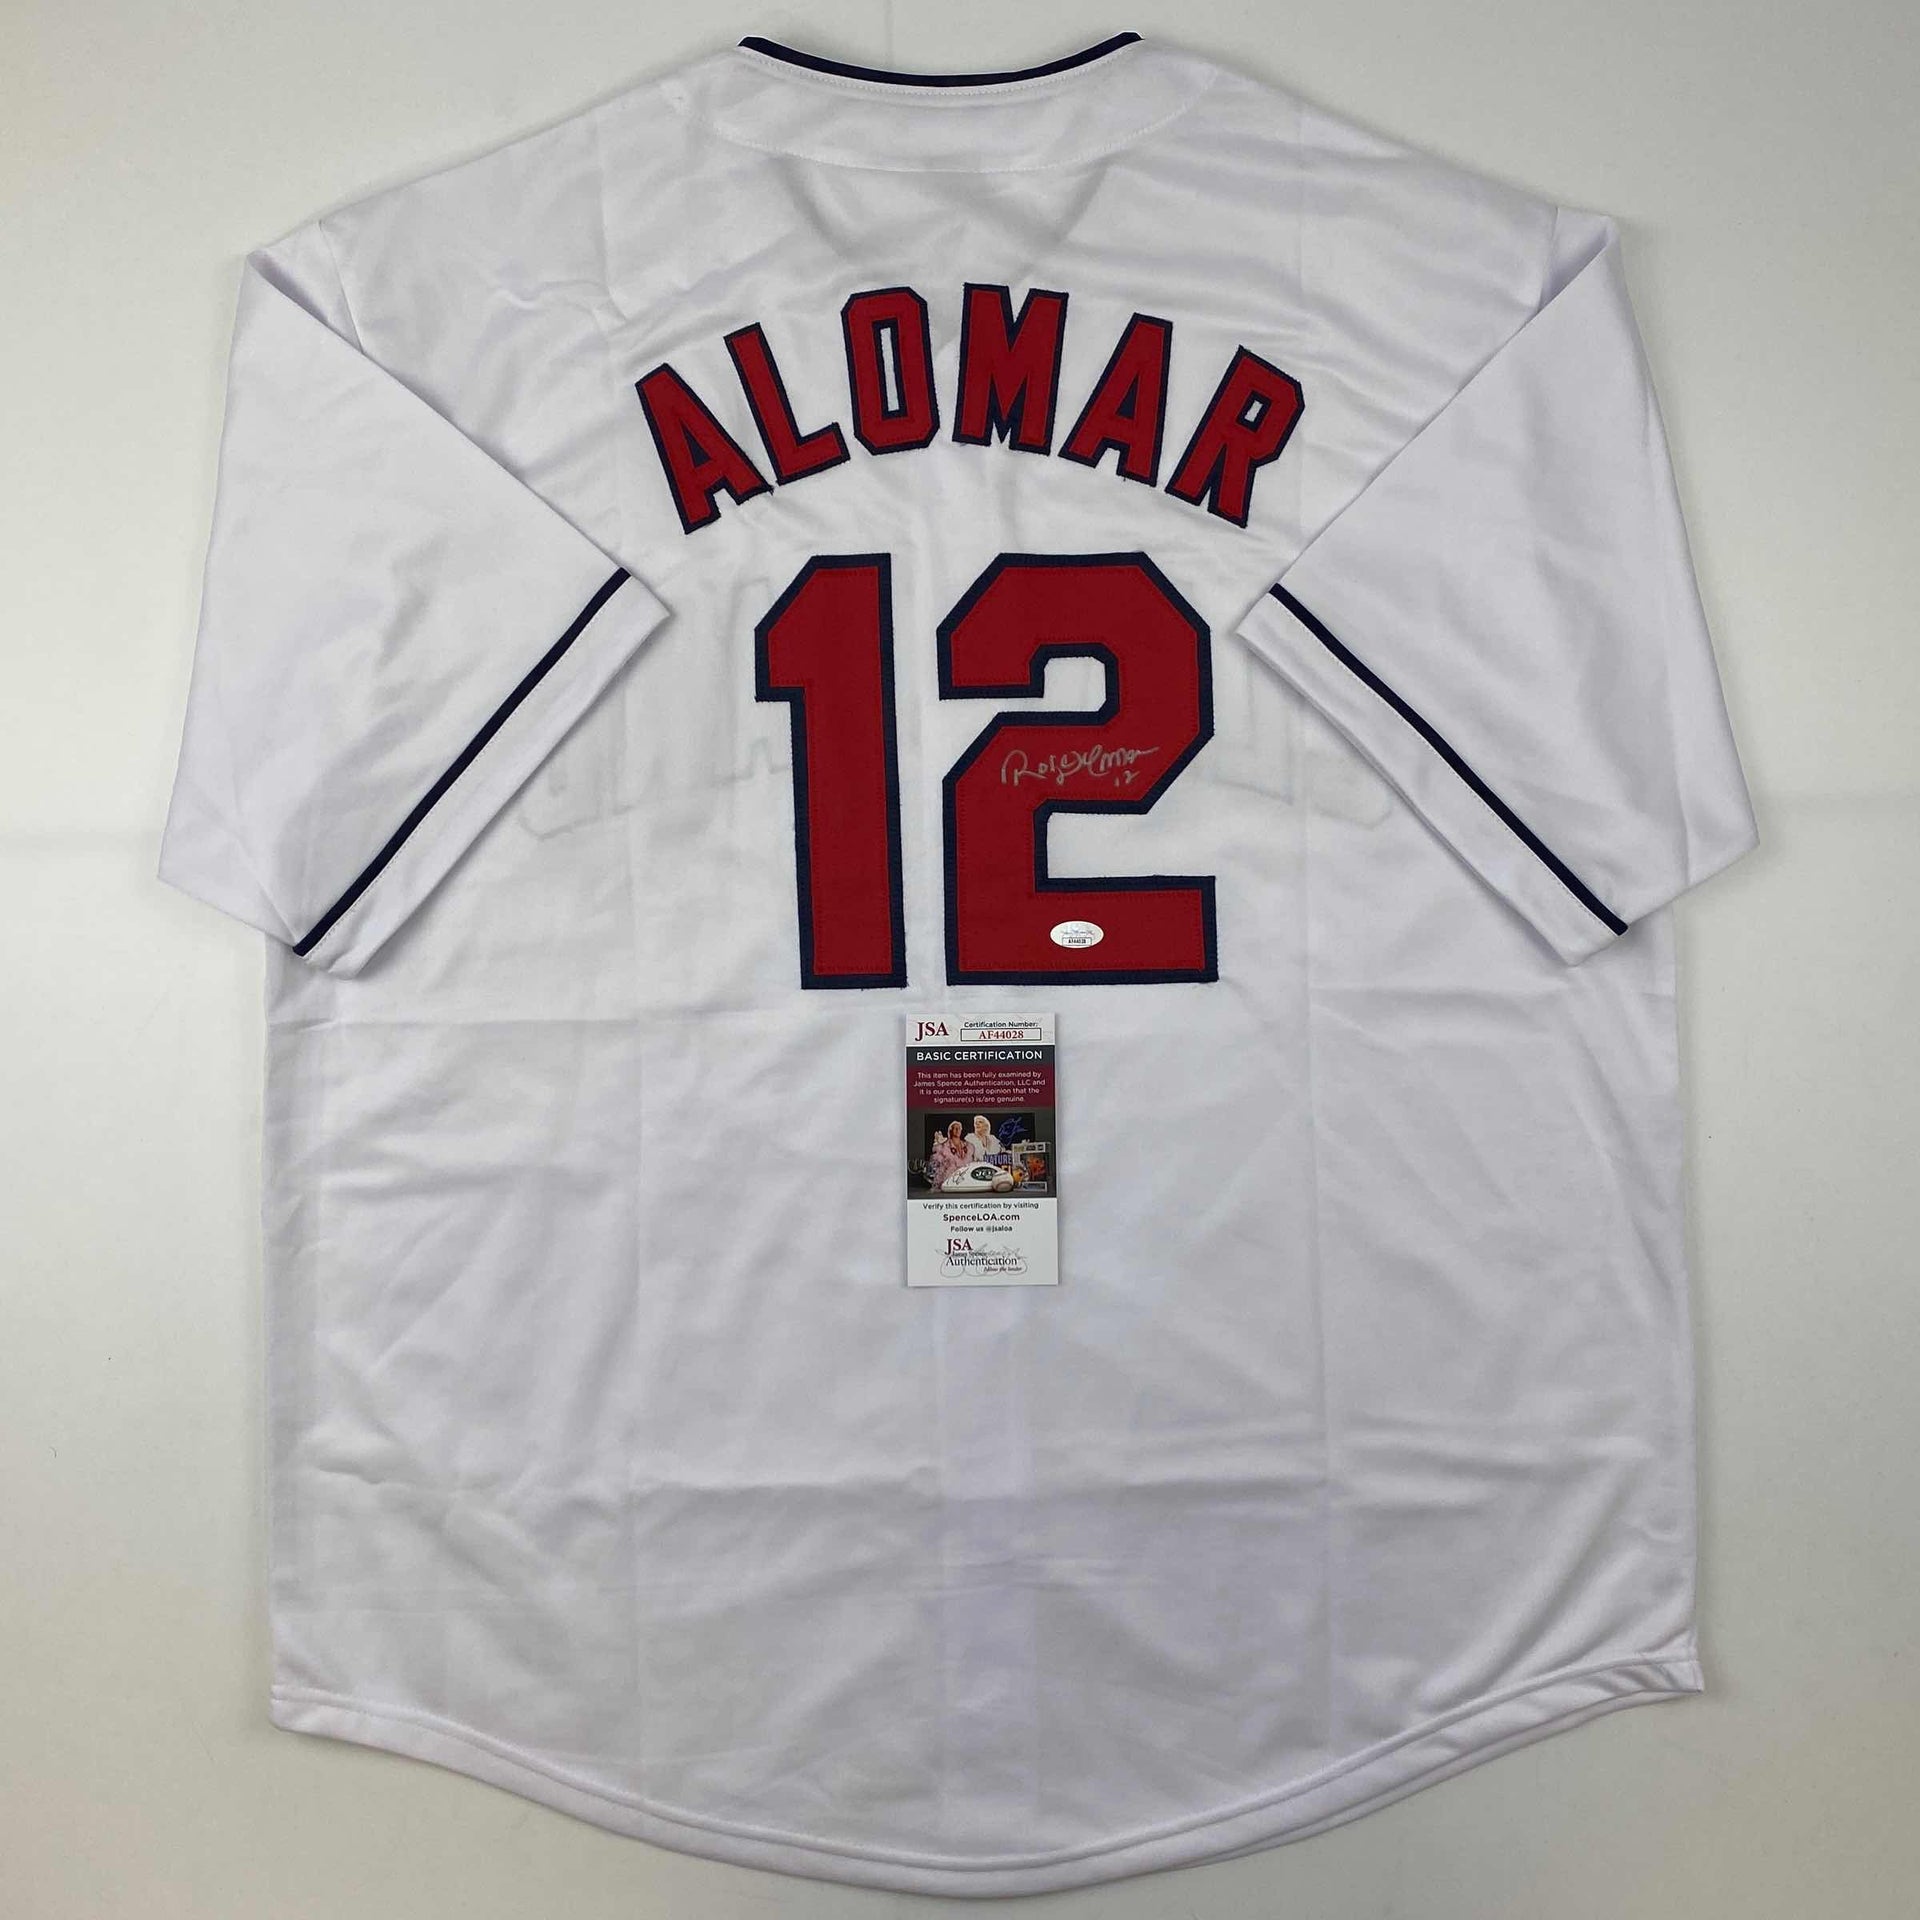 Roberto Alomar Hall of Fame jersey